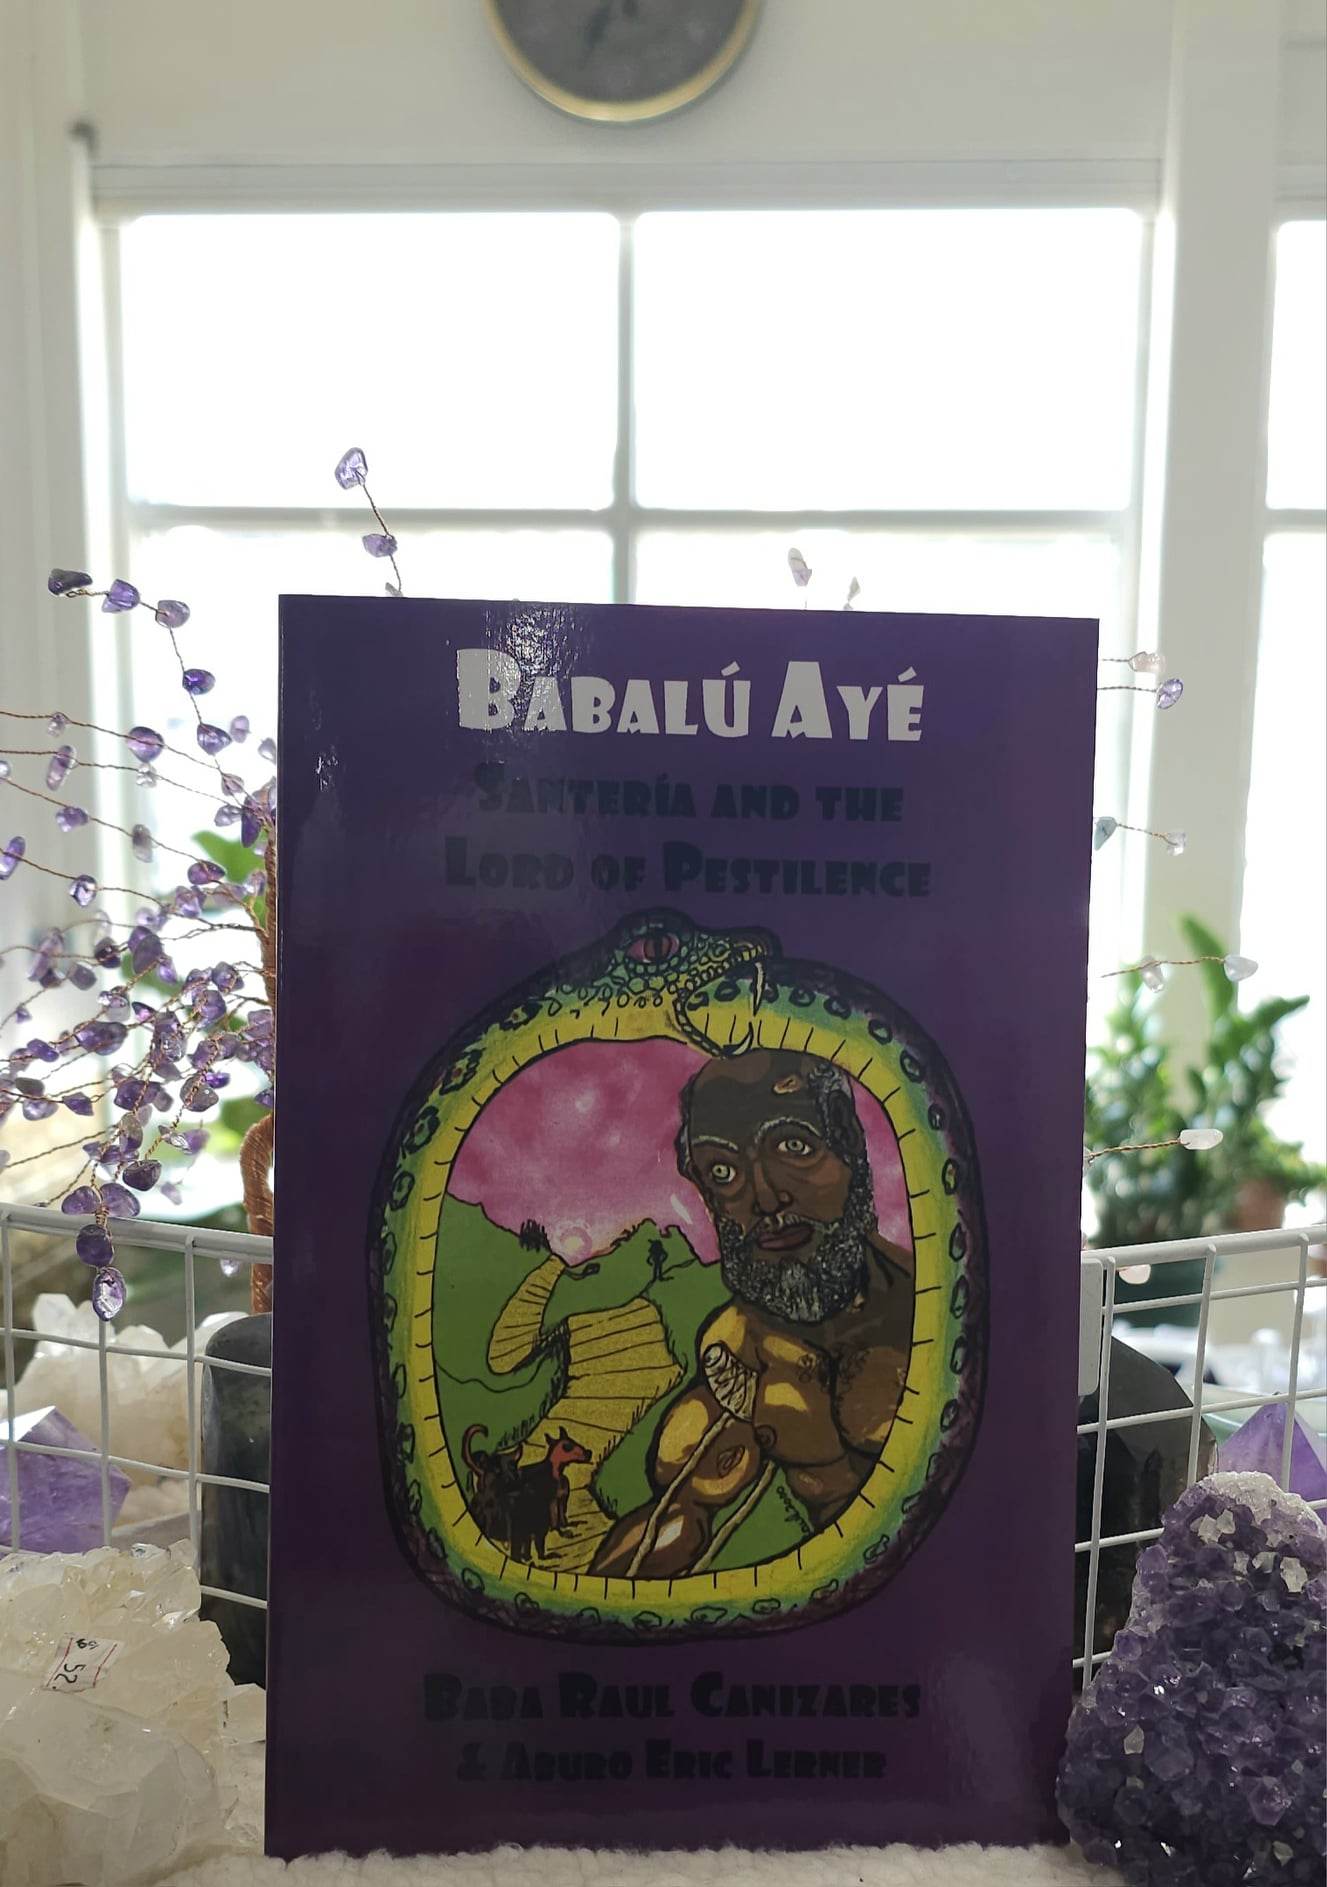 Babalu Aye: Santeria and the Lord of Pestilence